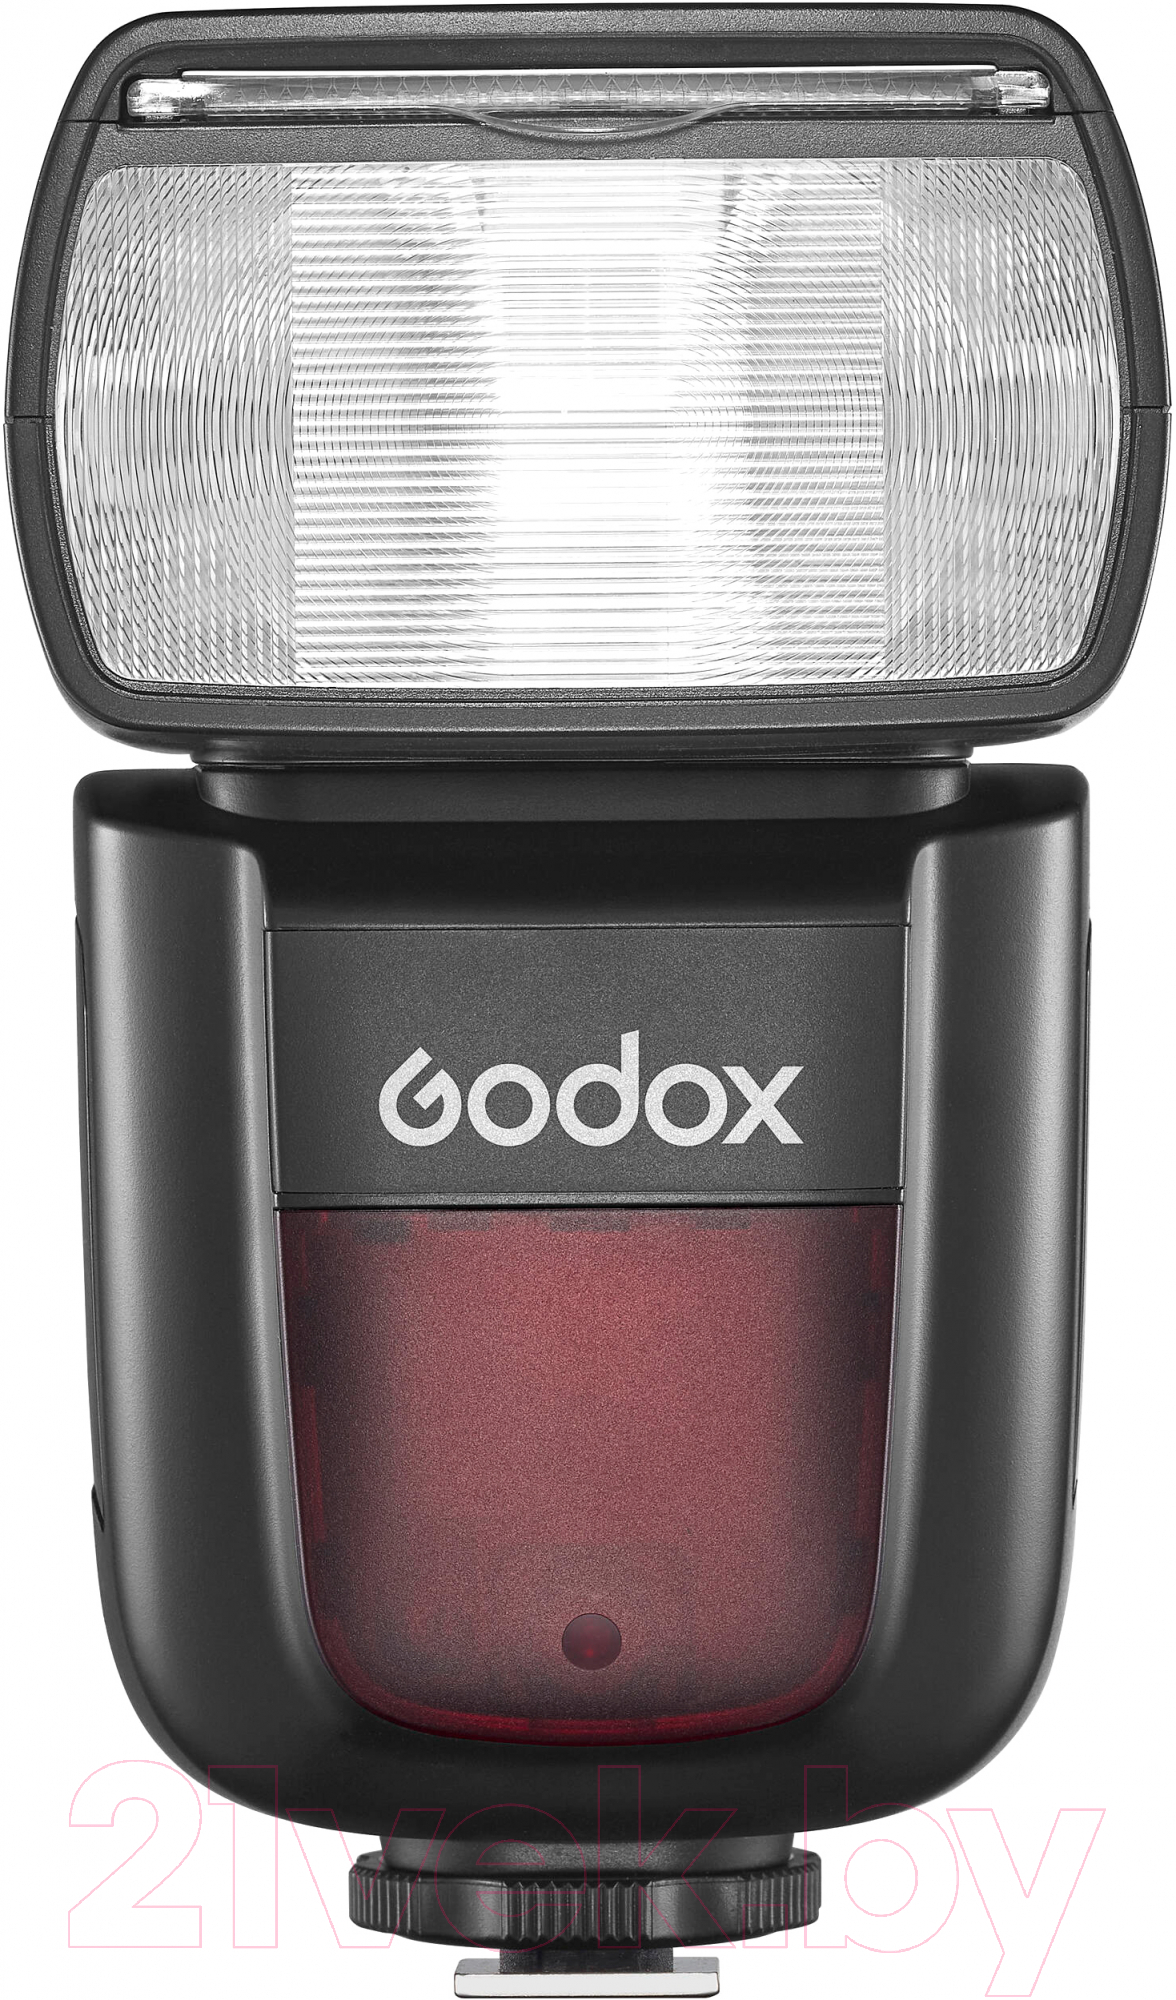 Вспышка Godox Ving V850III / 29142